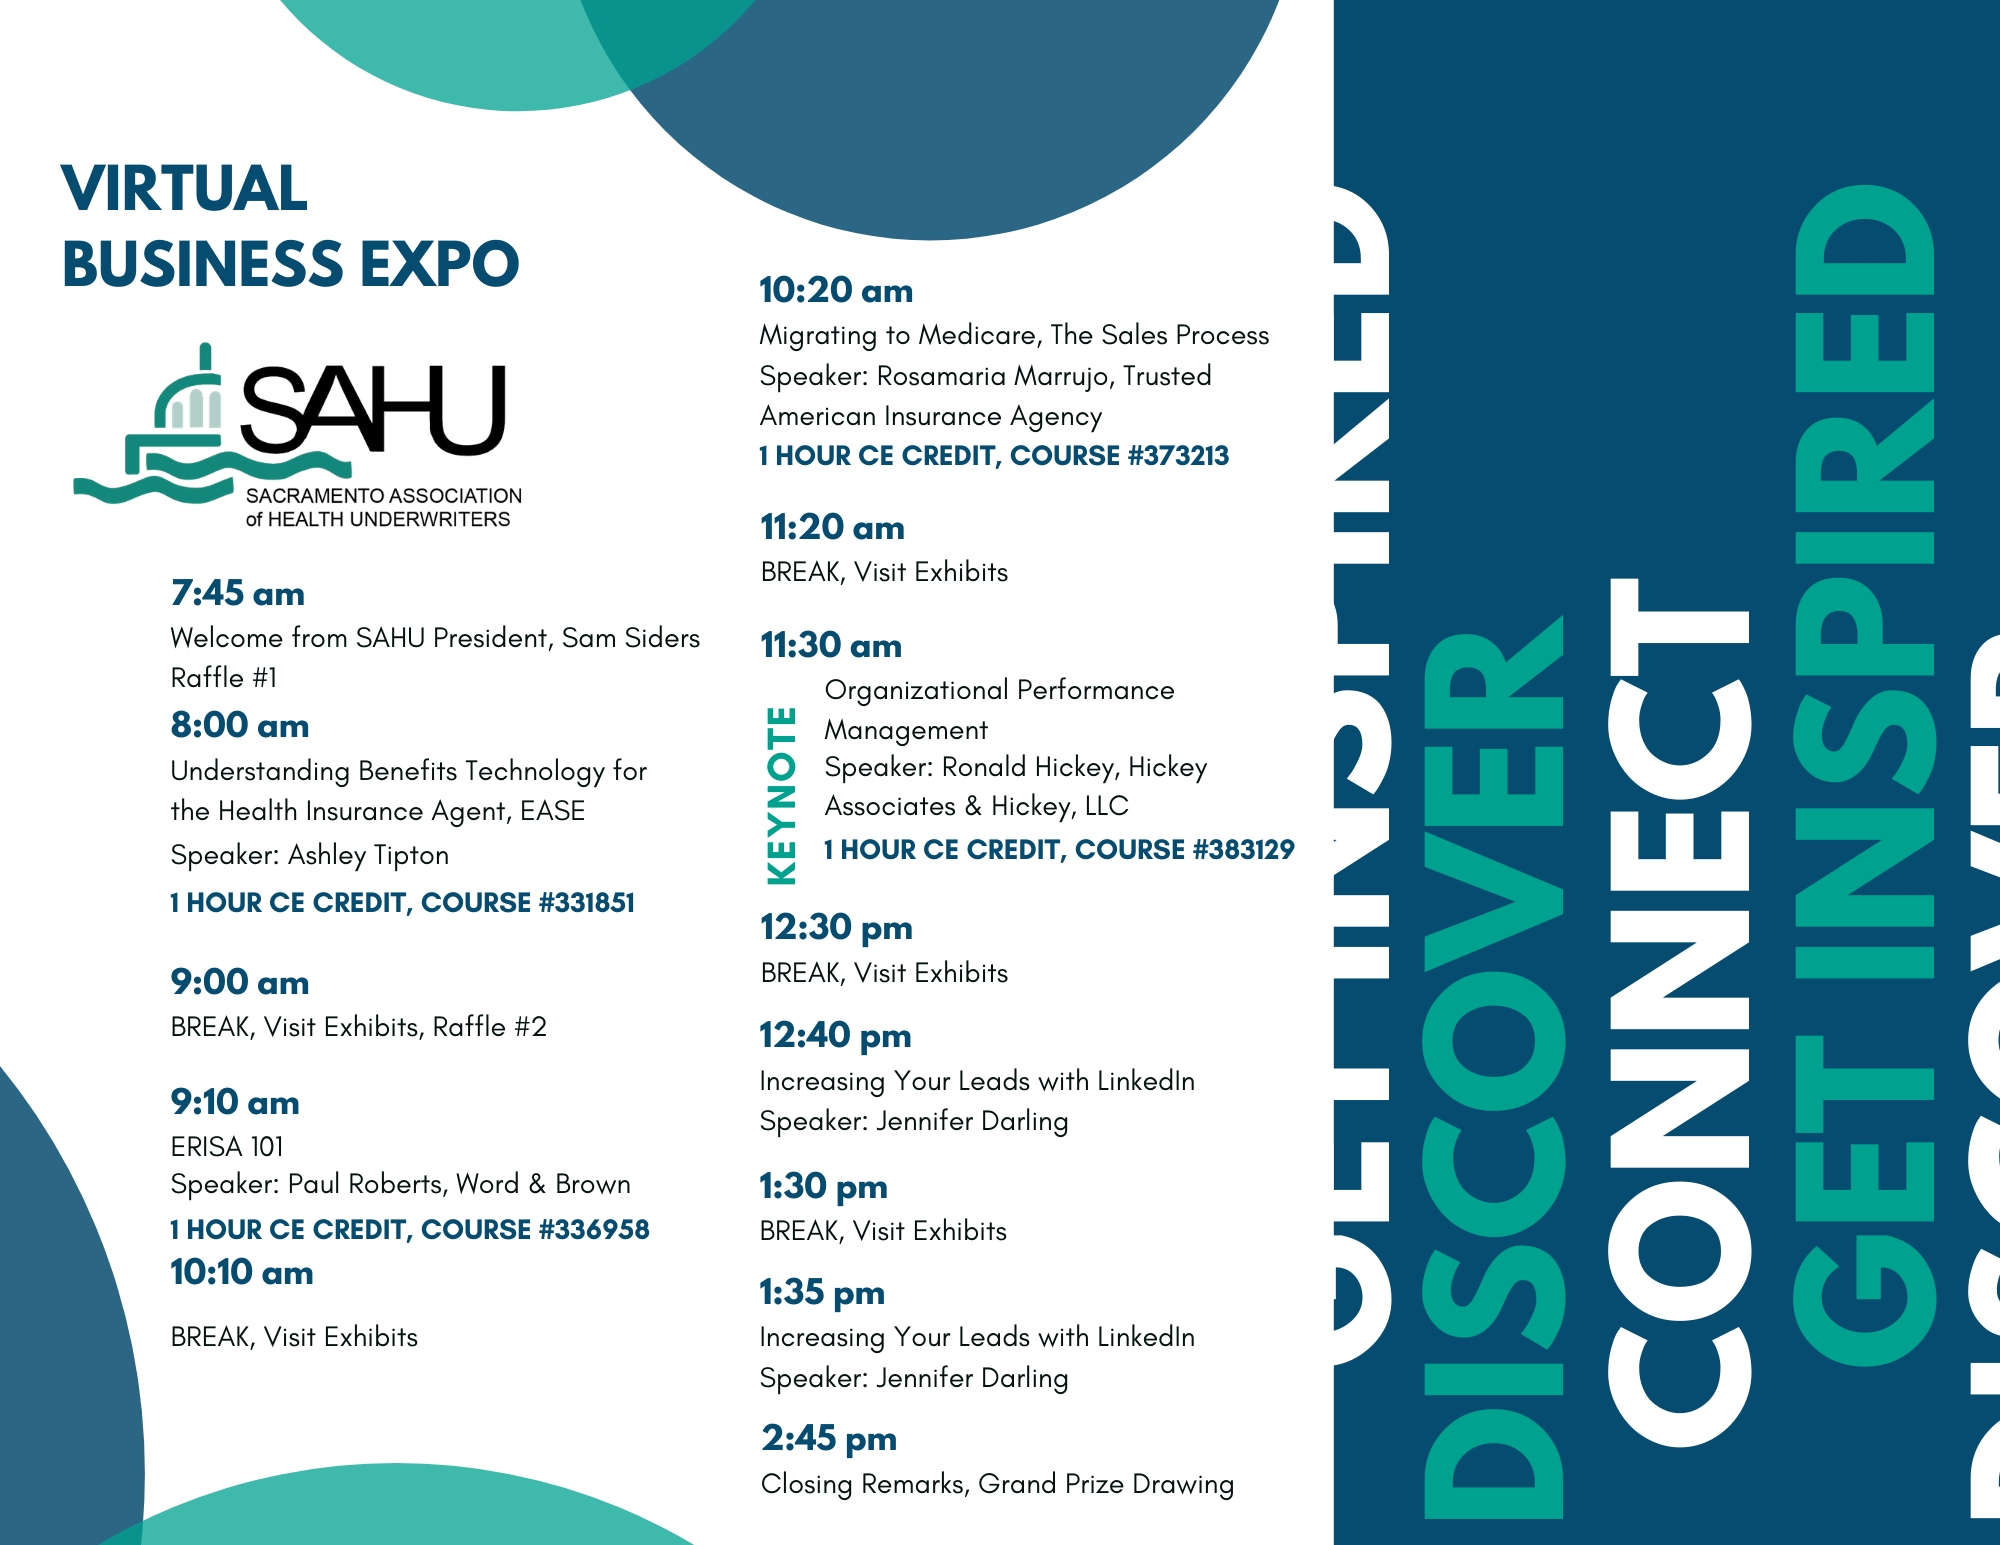 sahu business expo event schedule